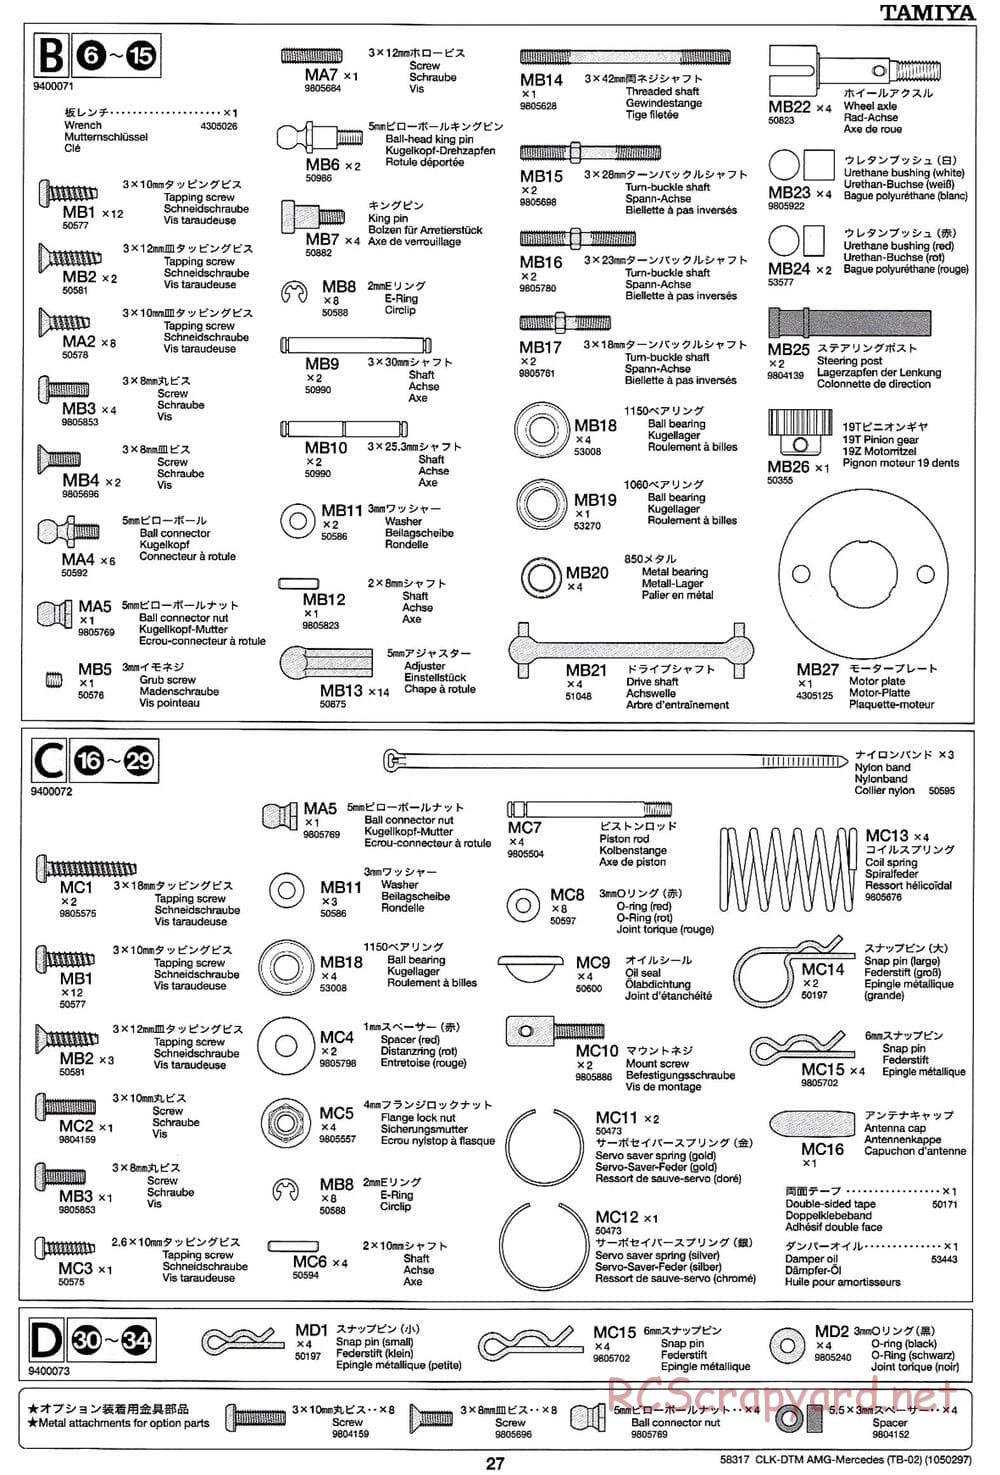 Tamiya - CLK DTM 2002 AMG Mercedes - TB-02 Chassis - Manual - Page 27